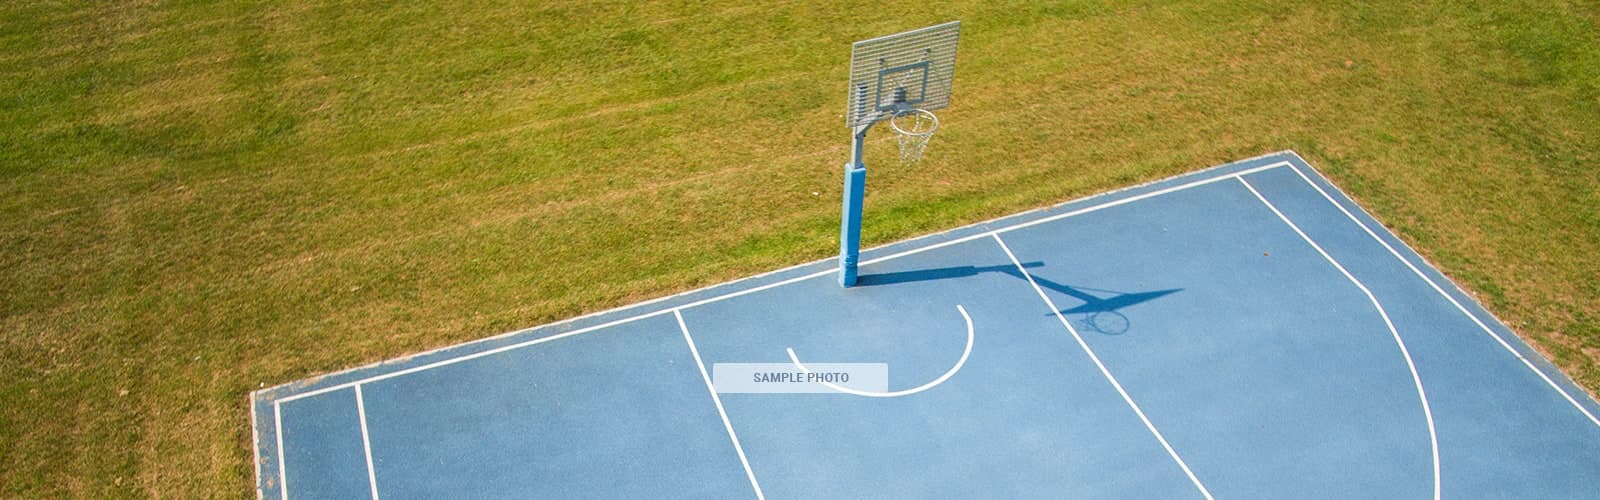 Fahari L. Jeffers Elementary School Outdoor Basketball Courts in Chula Vista California - undefined